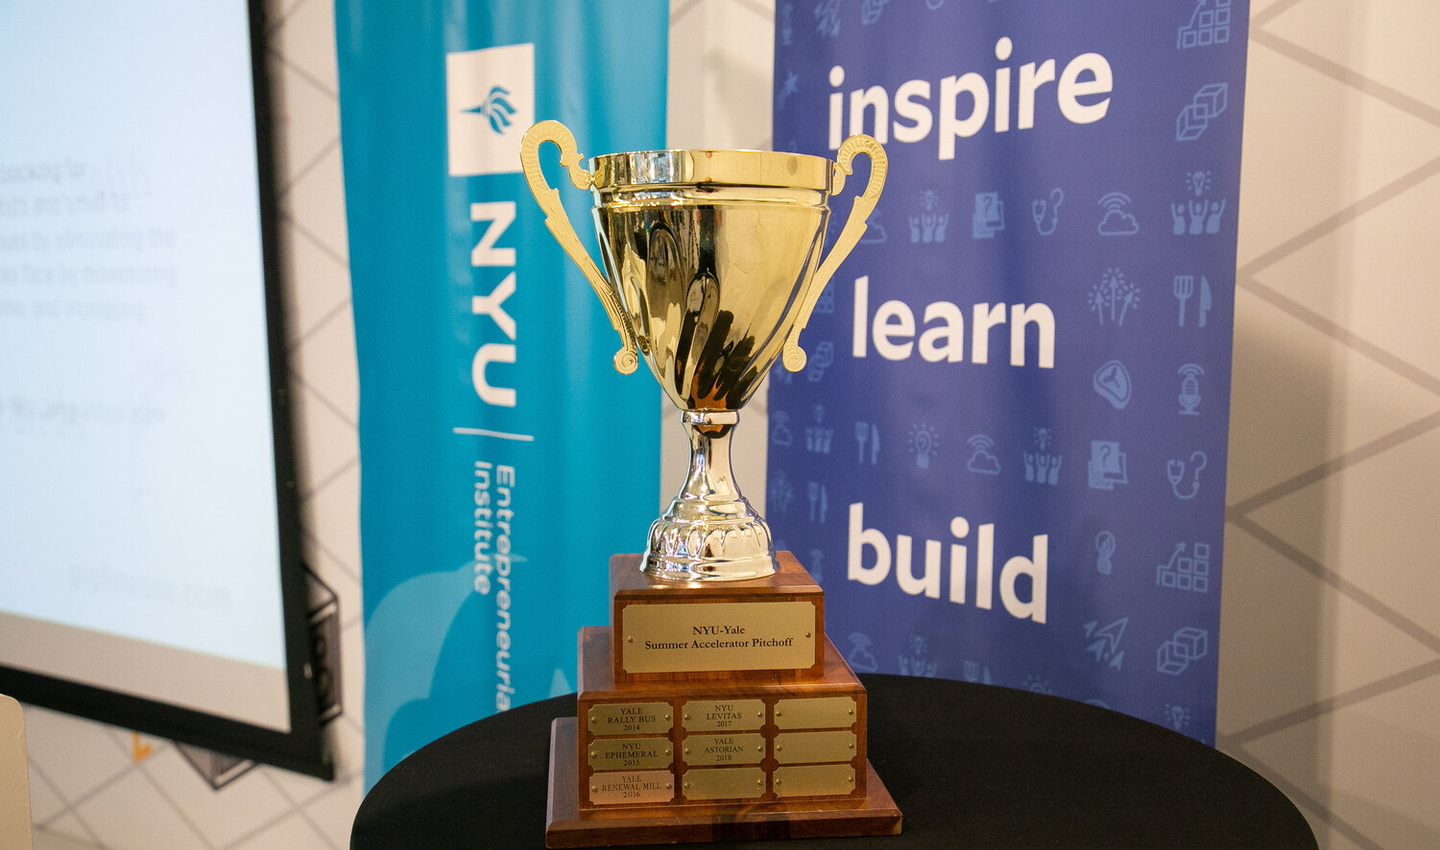 7th Annual NYU-Yale Pitchoff Prize